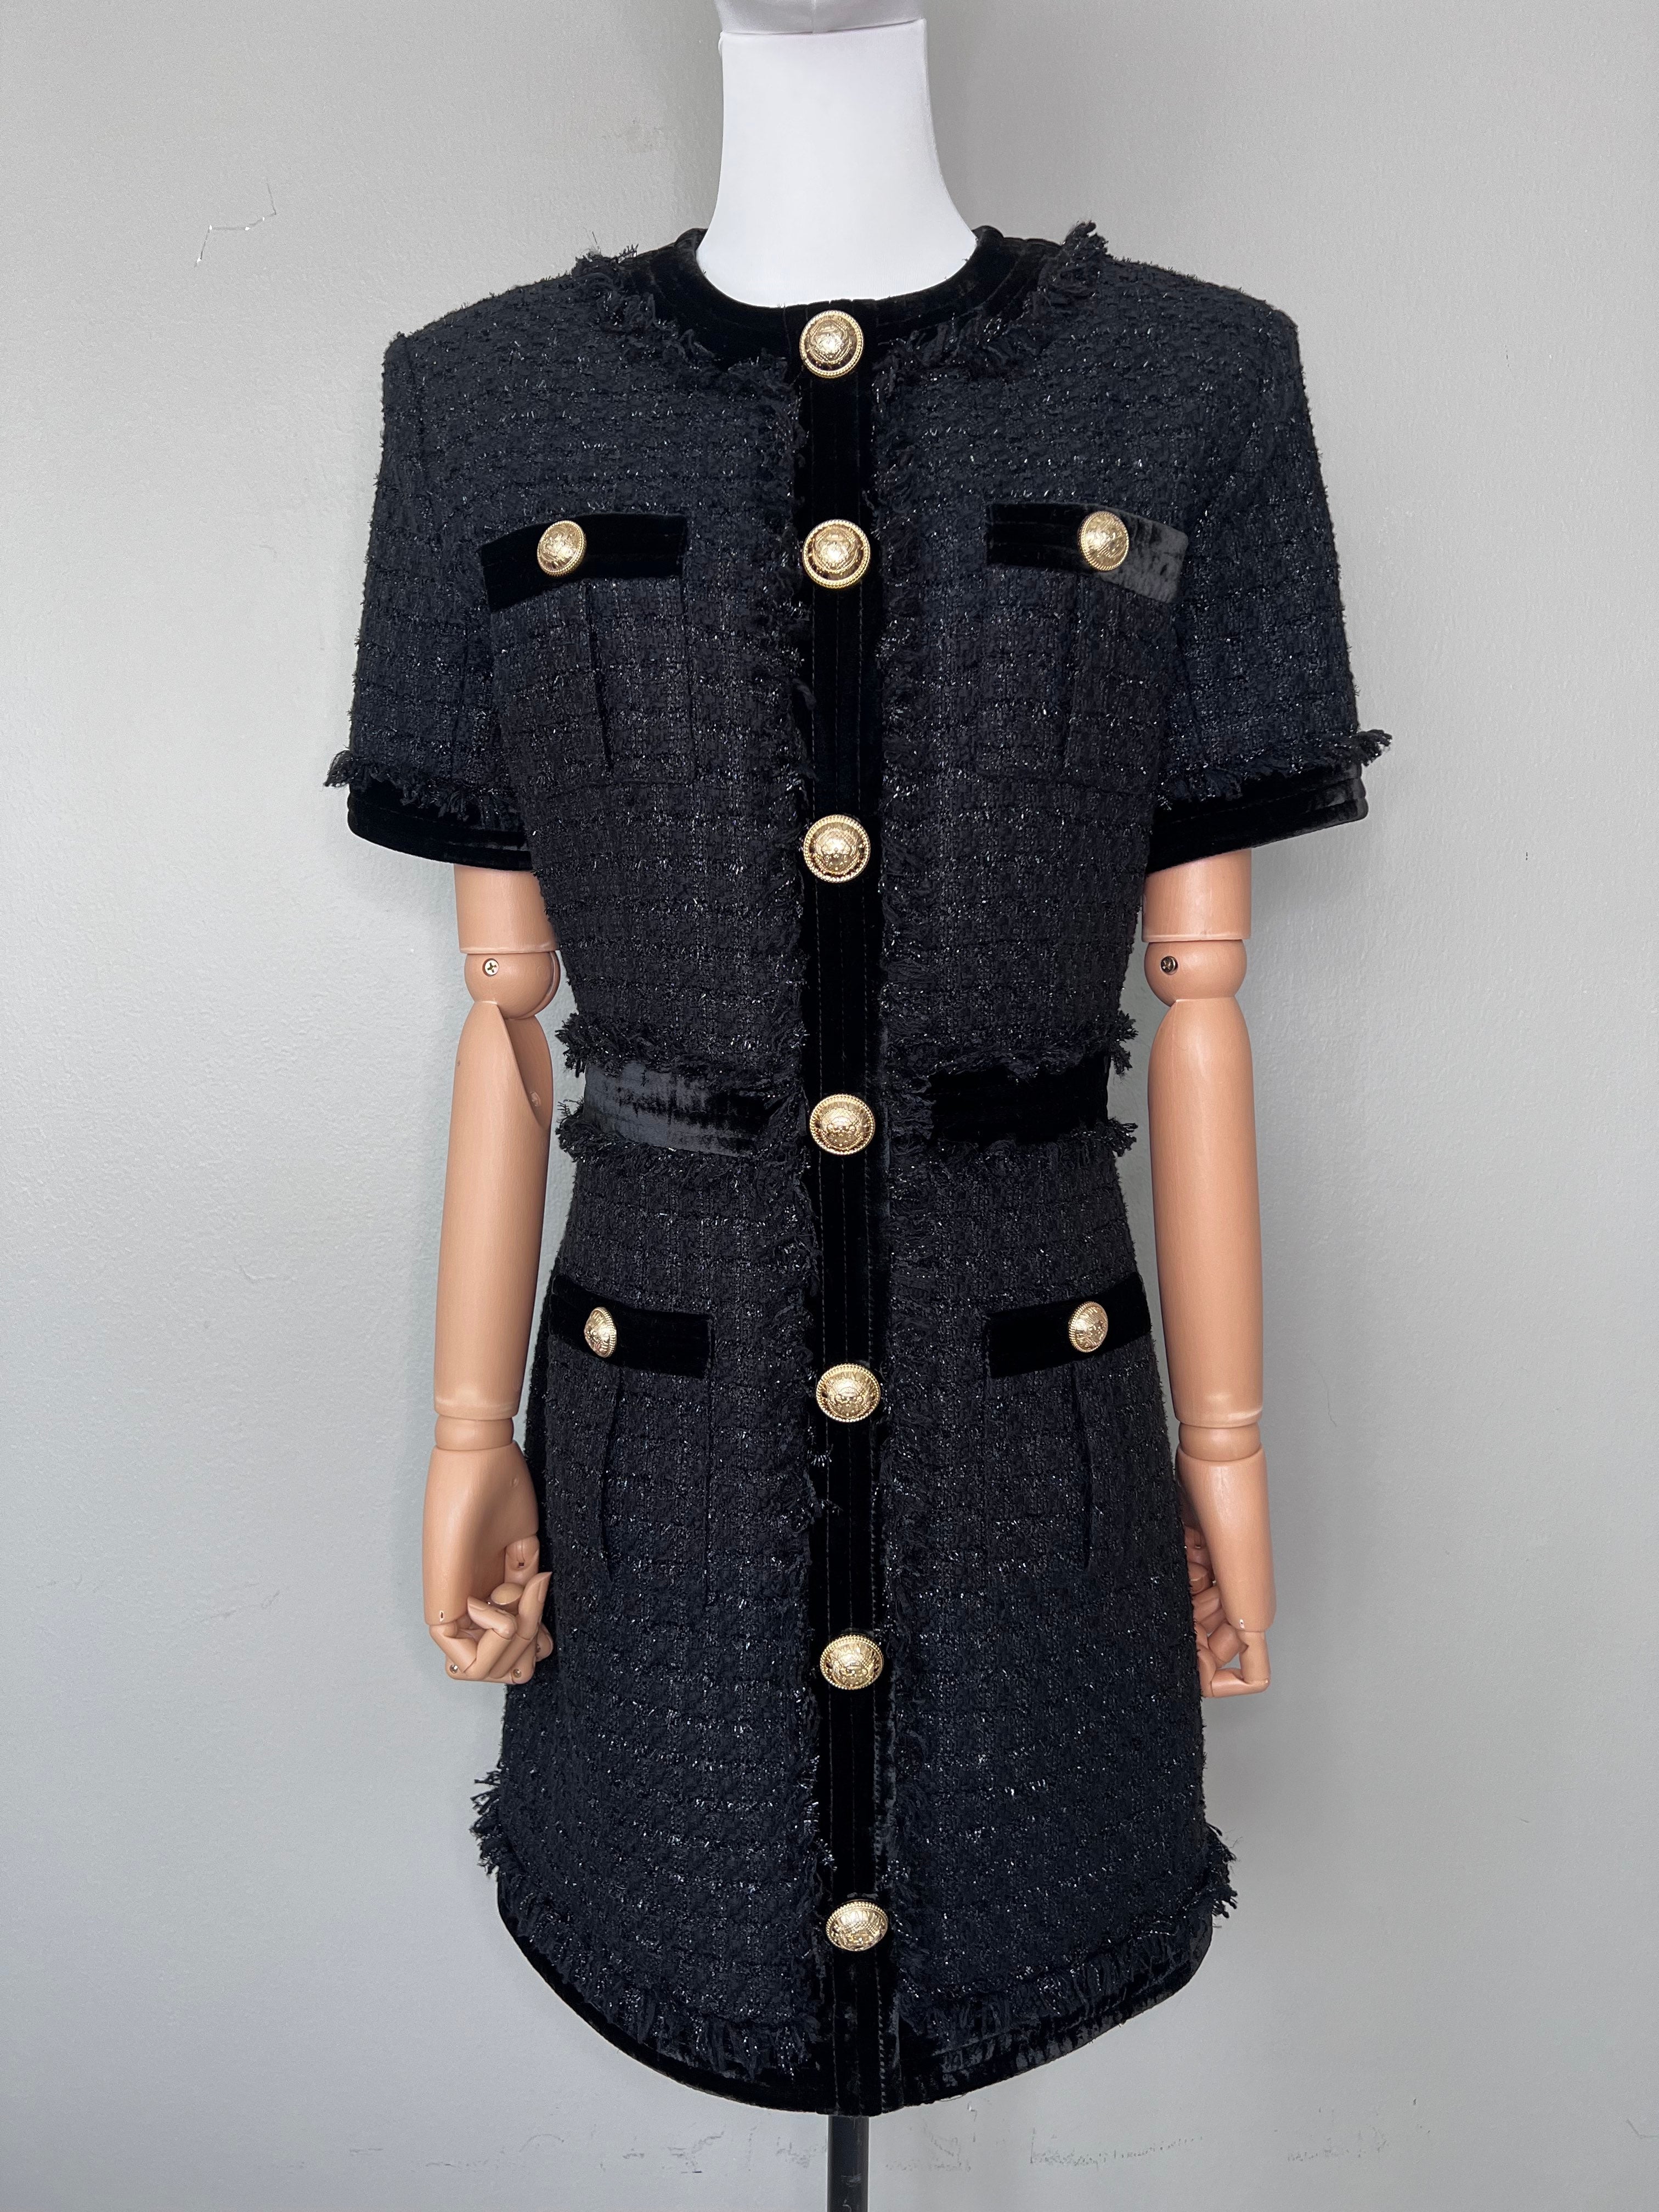 Brand new! The Classic Black Tweed Dress - BALMAIN